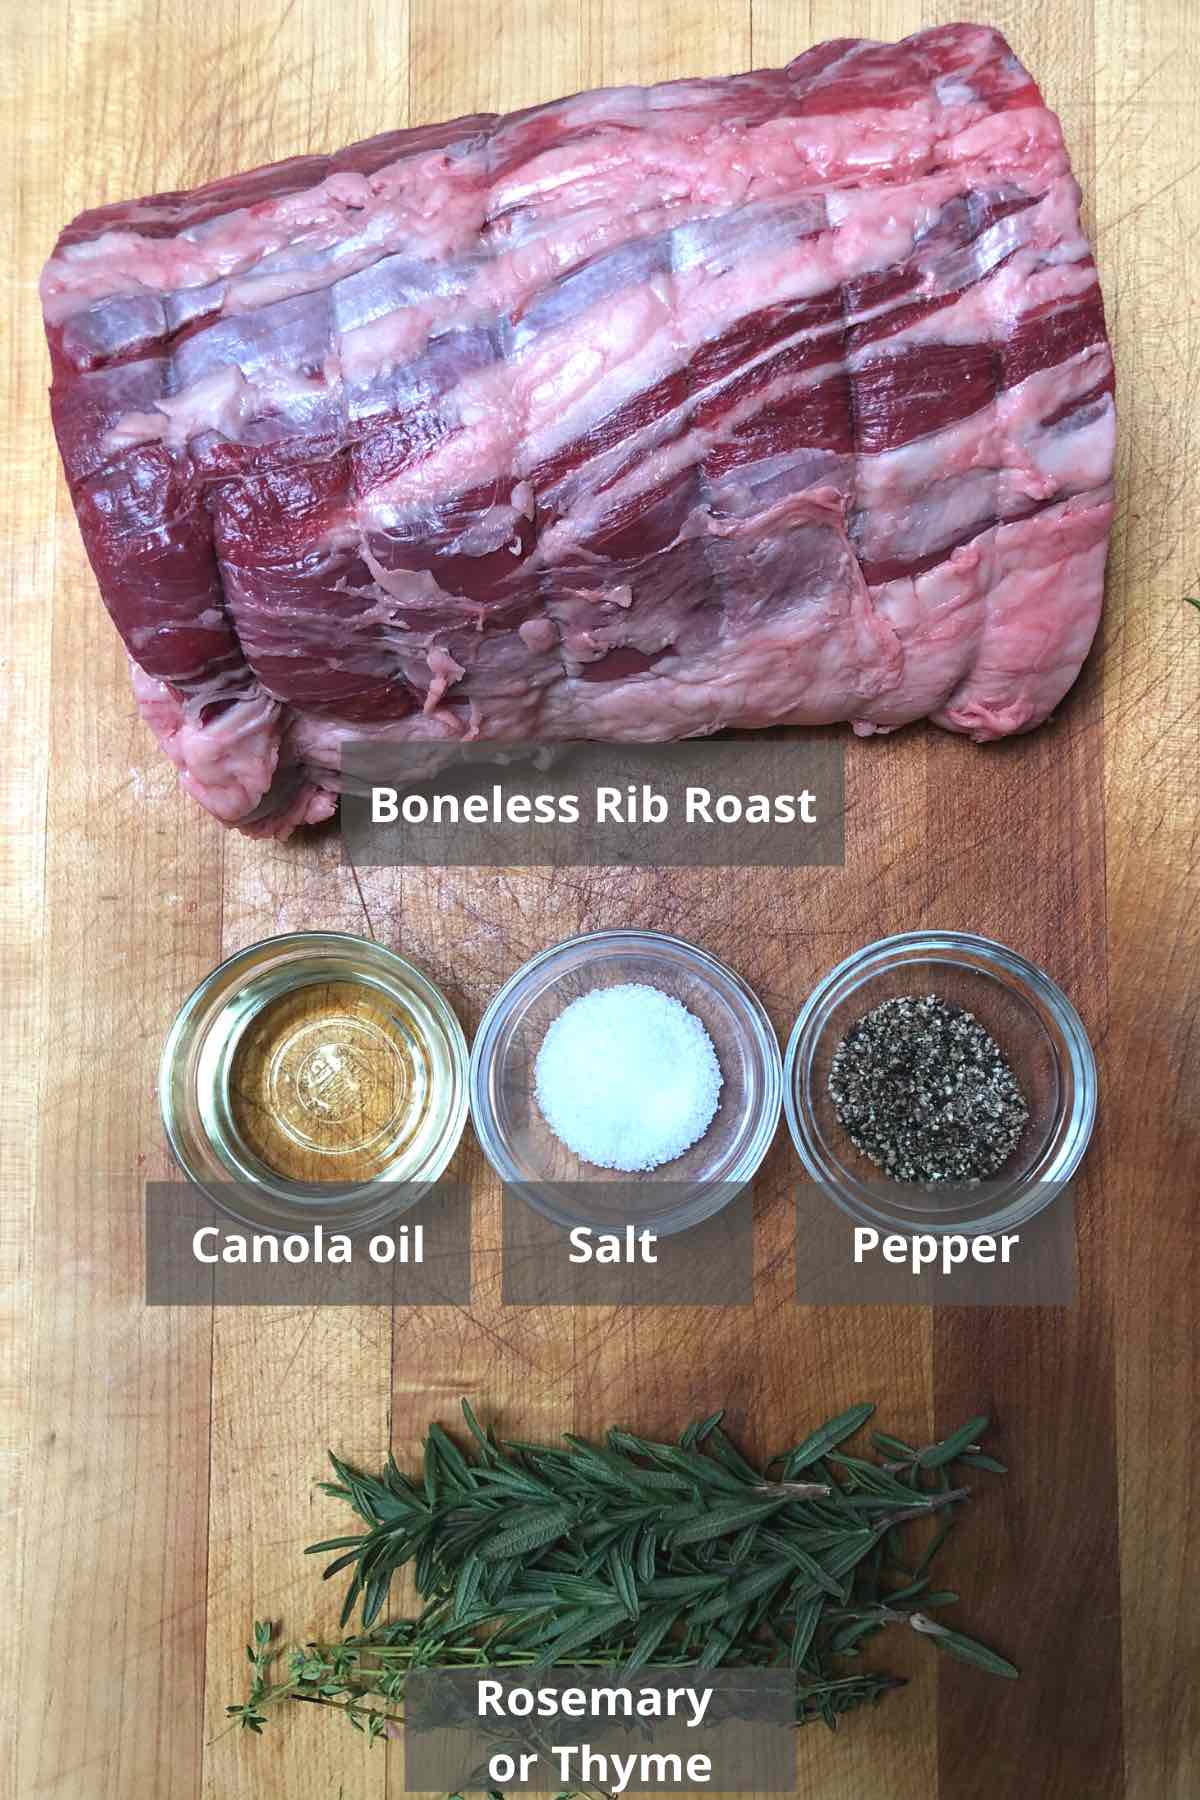 Ingredients for making a boneless prime rib roast